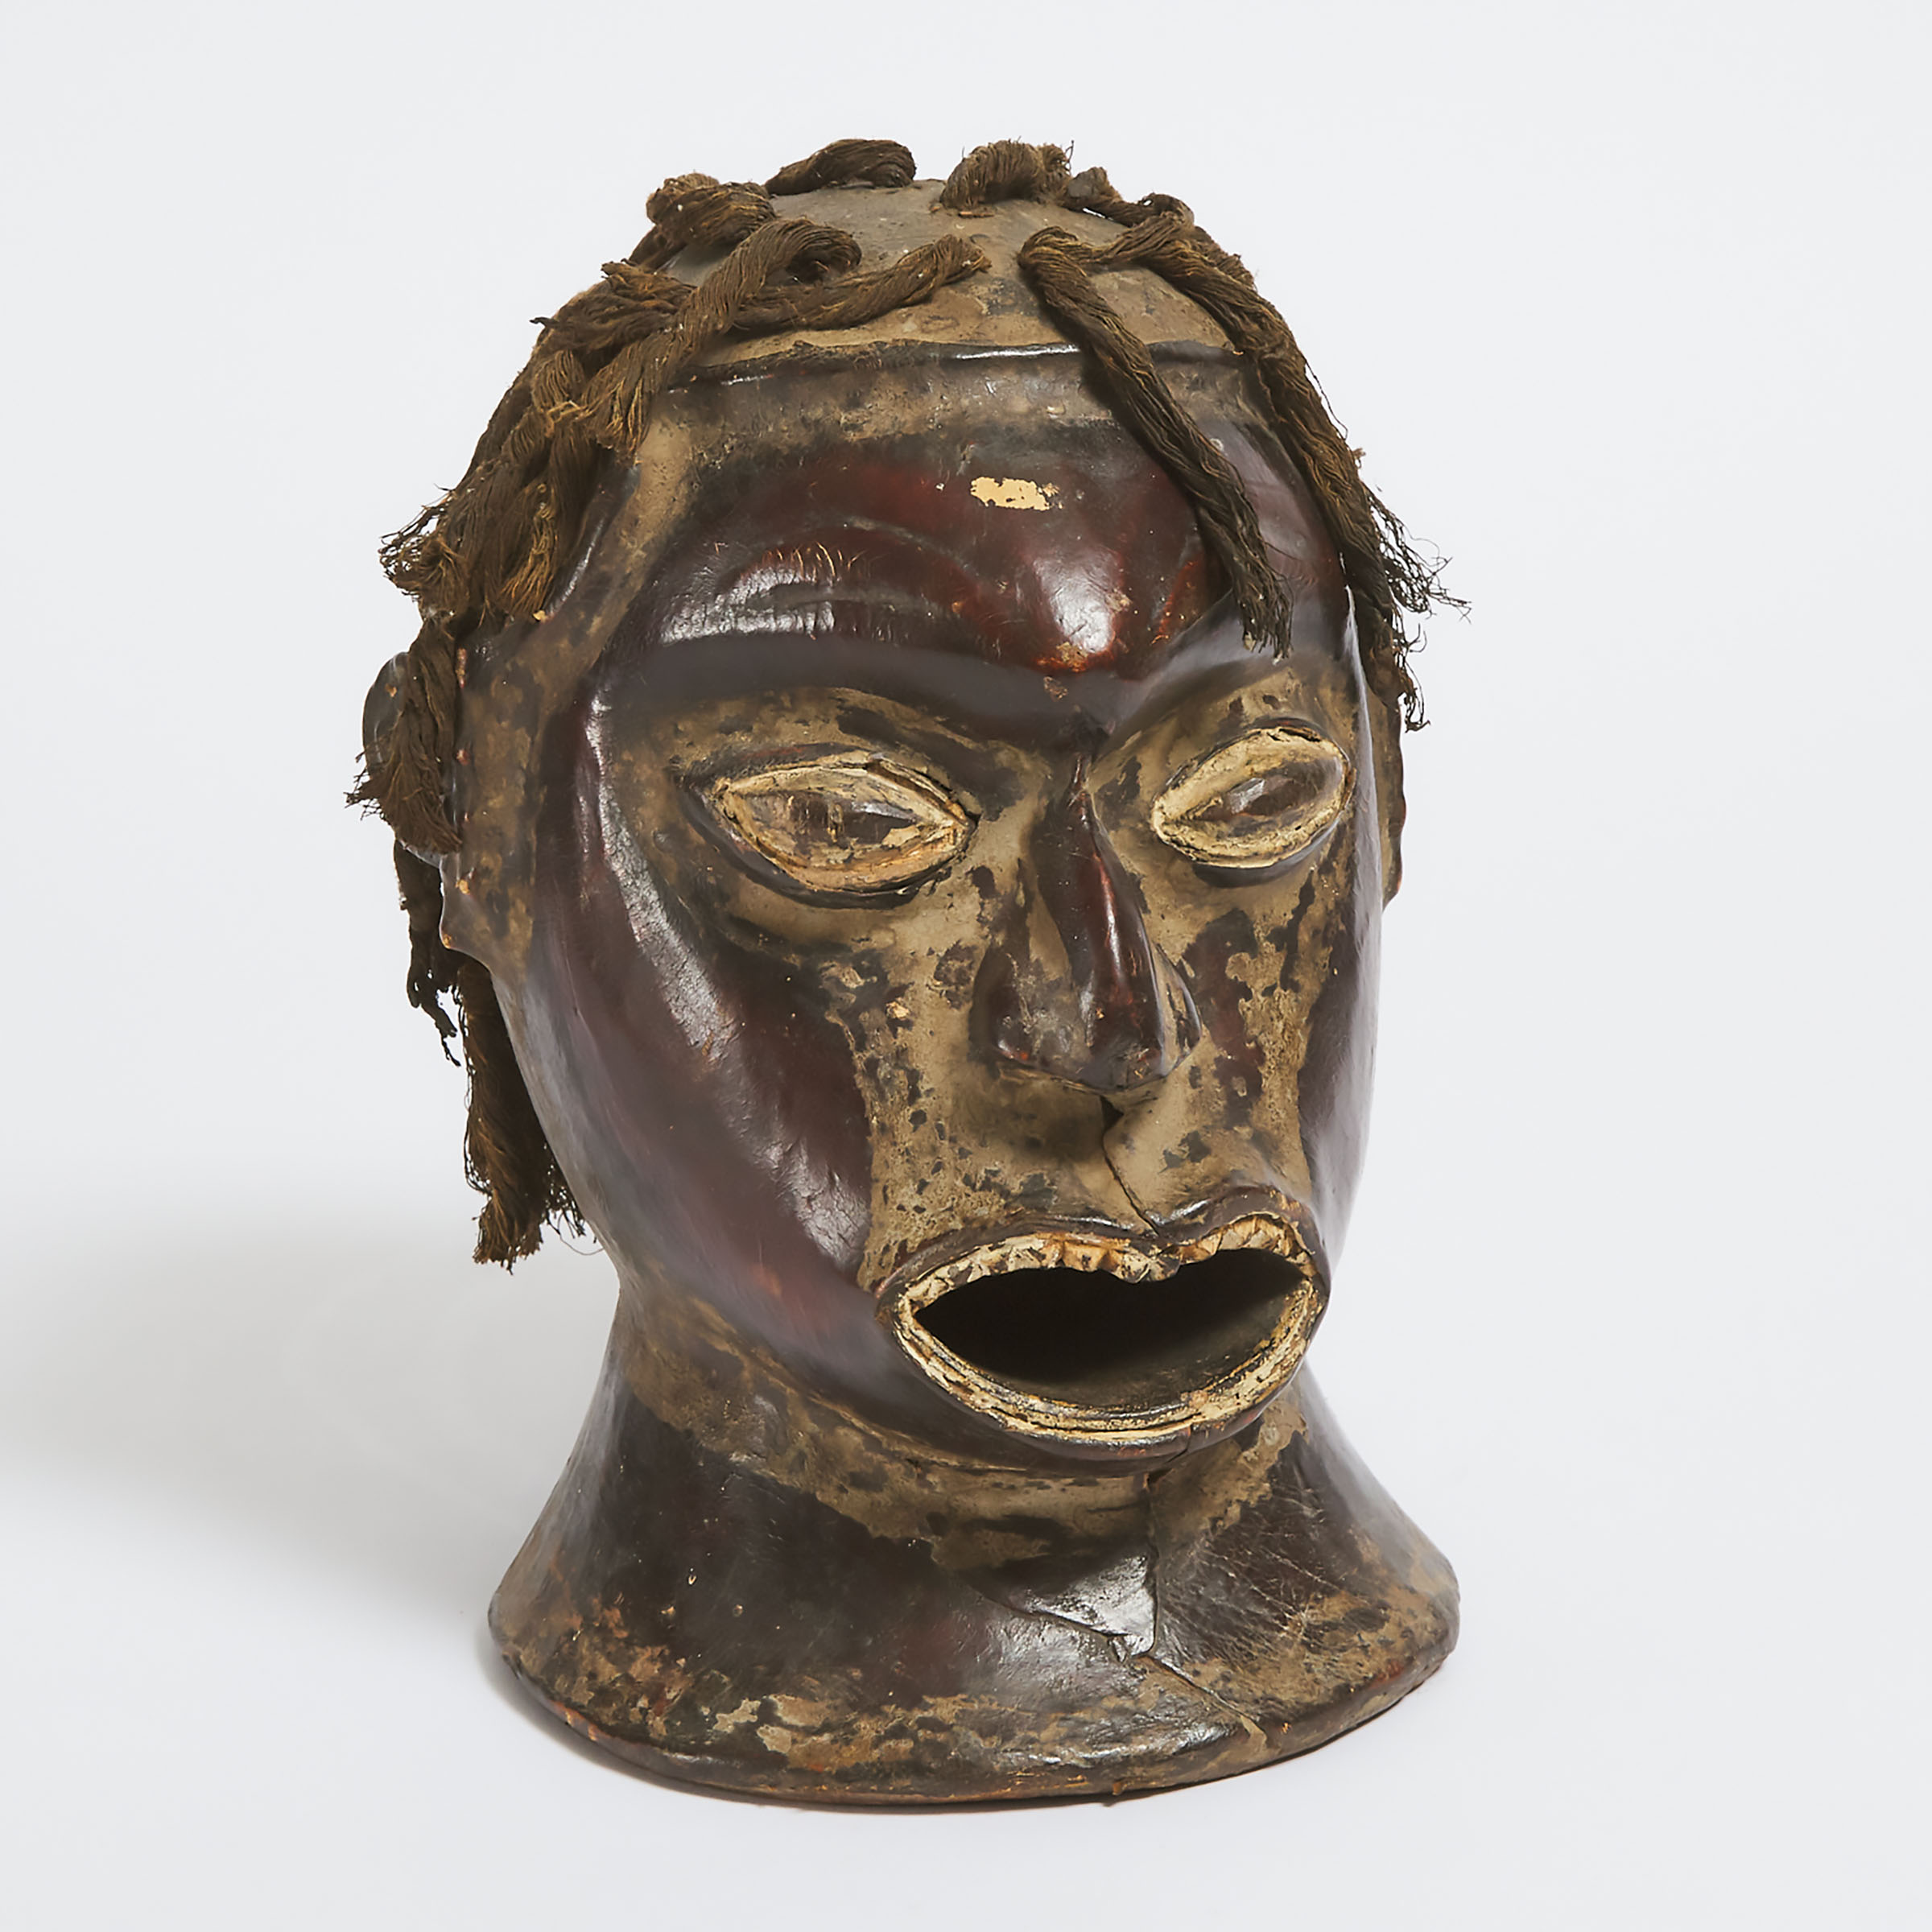 Ekoi Headdress, Nigeria/Cameroon, North Africa, early to mid 20th century